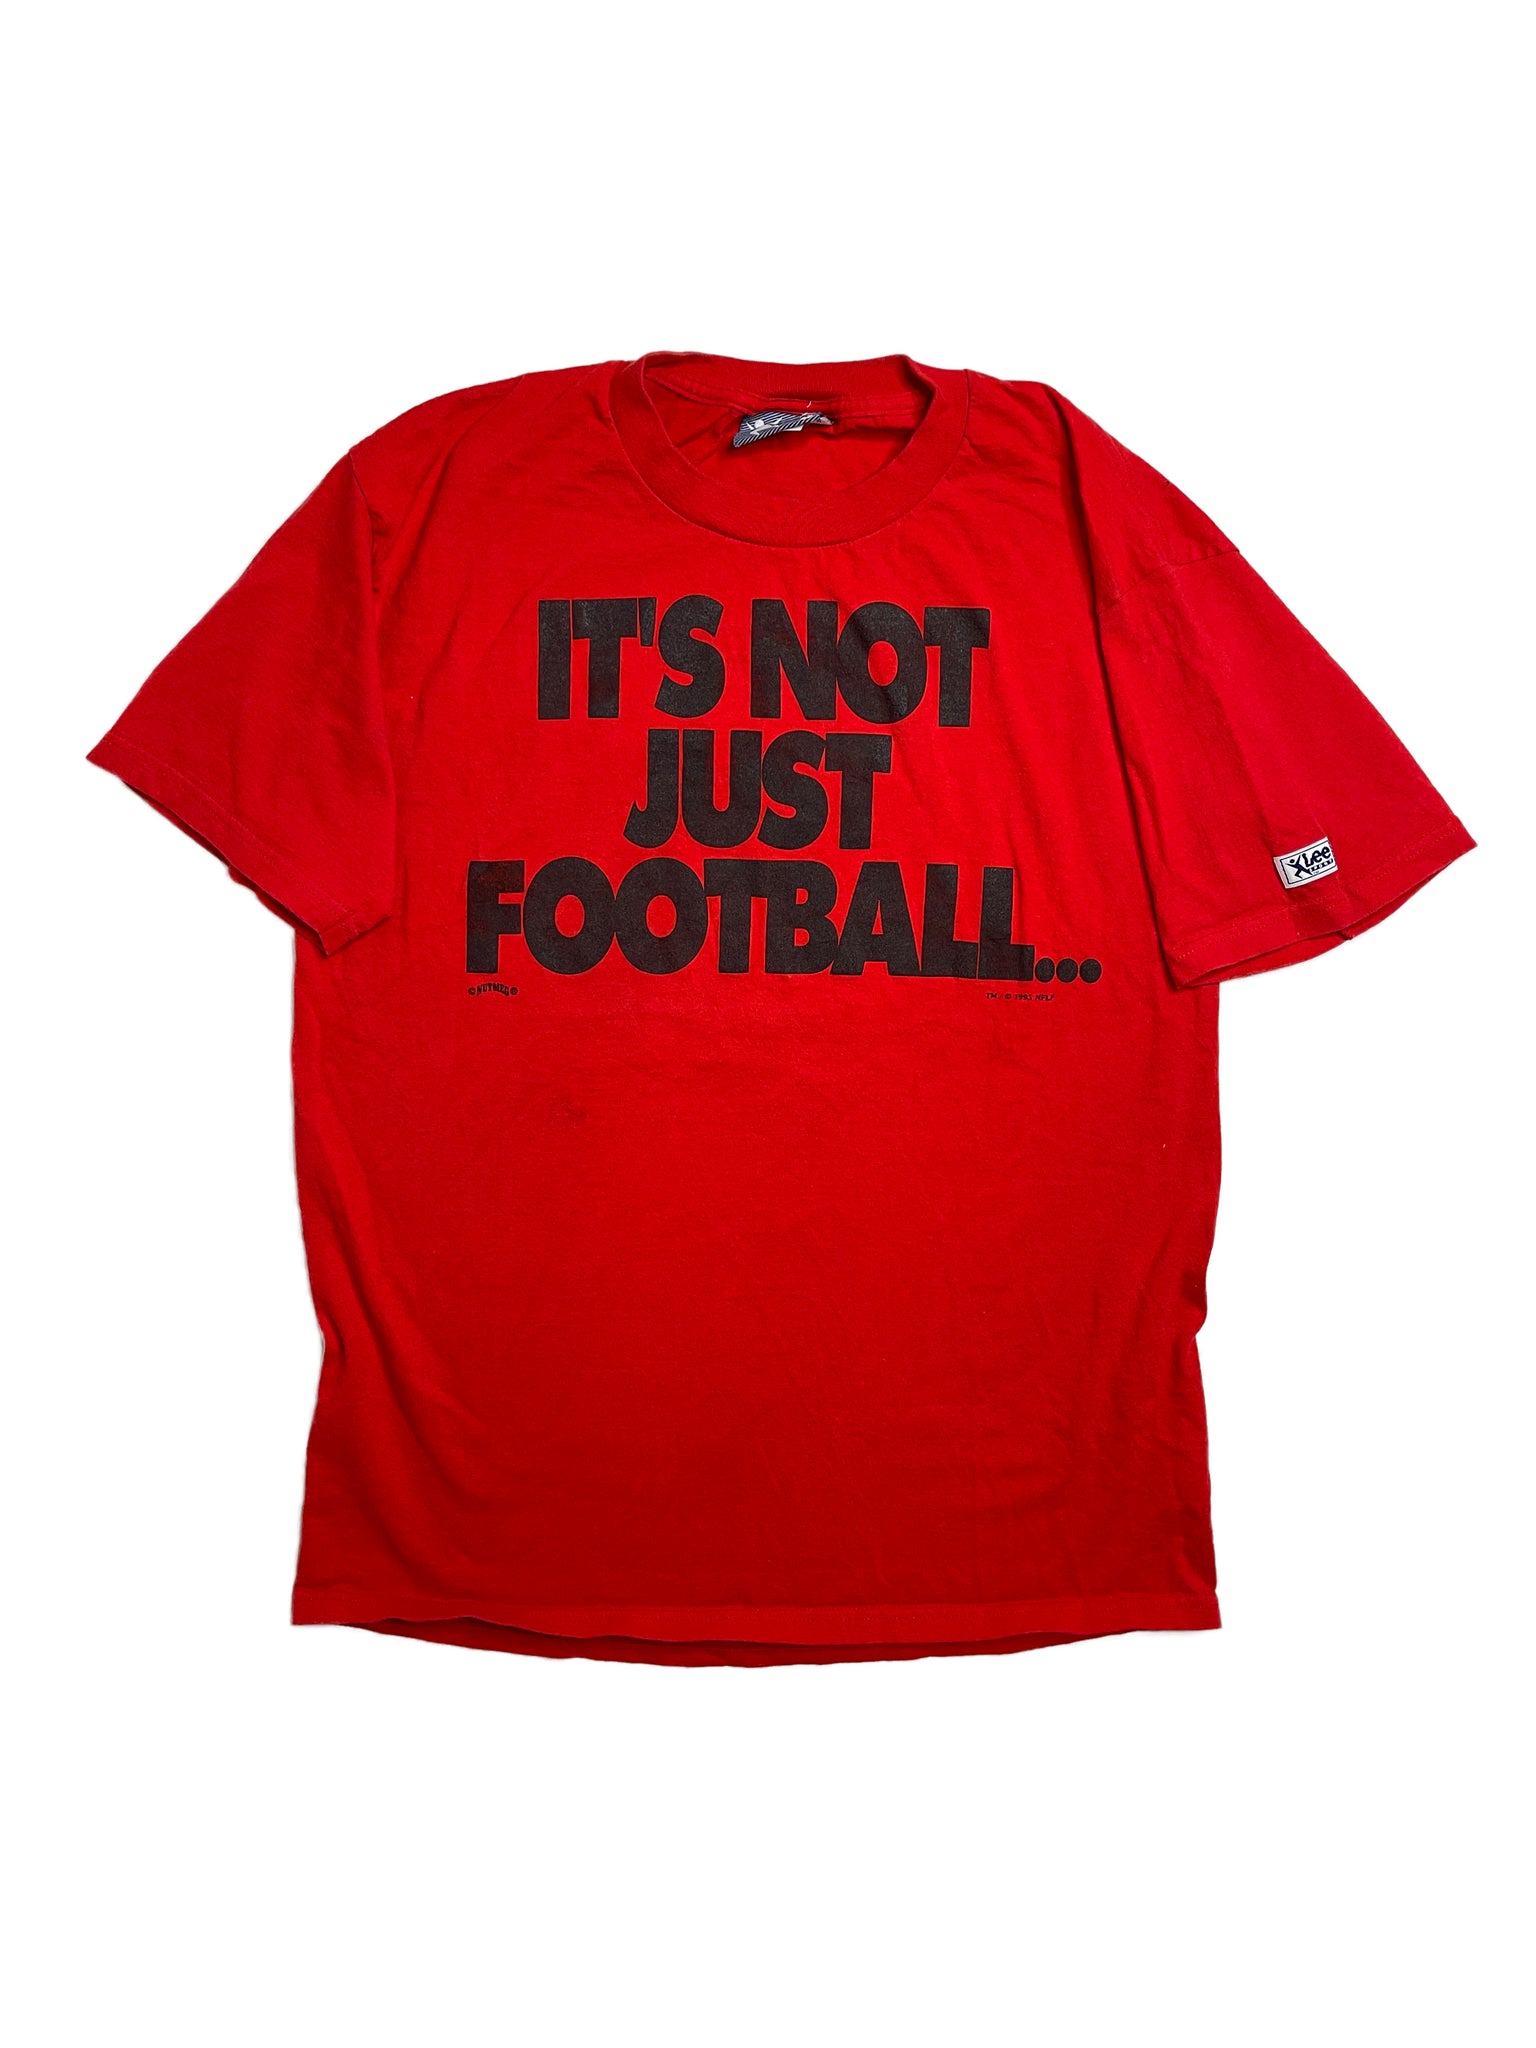 vintage "it's not just football" 49ers tee